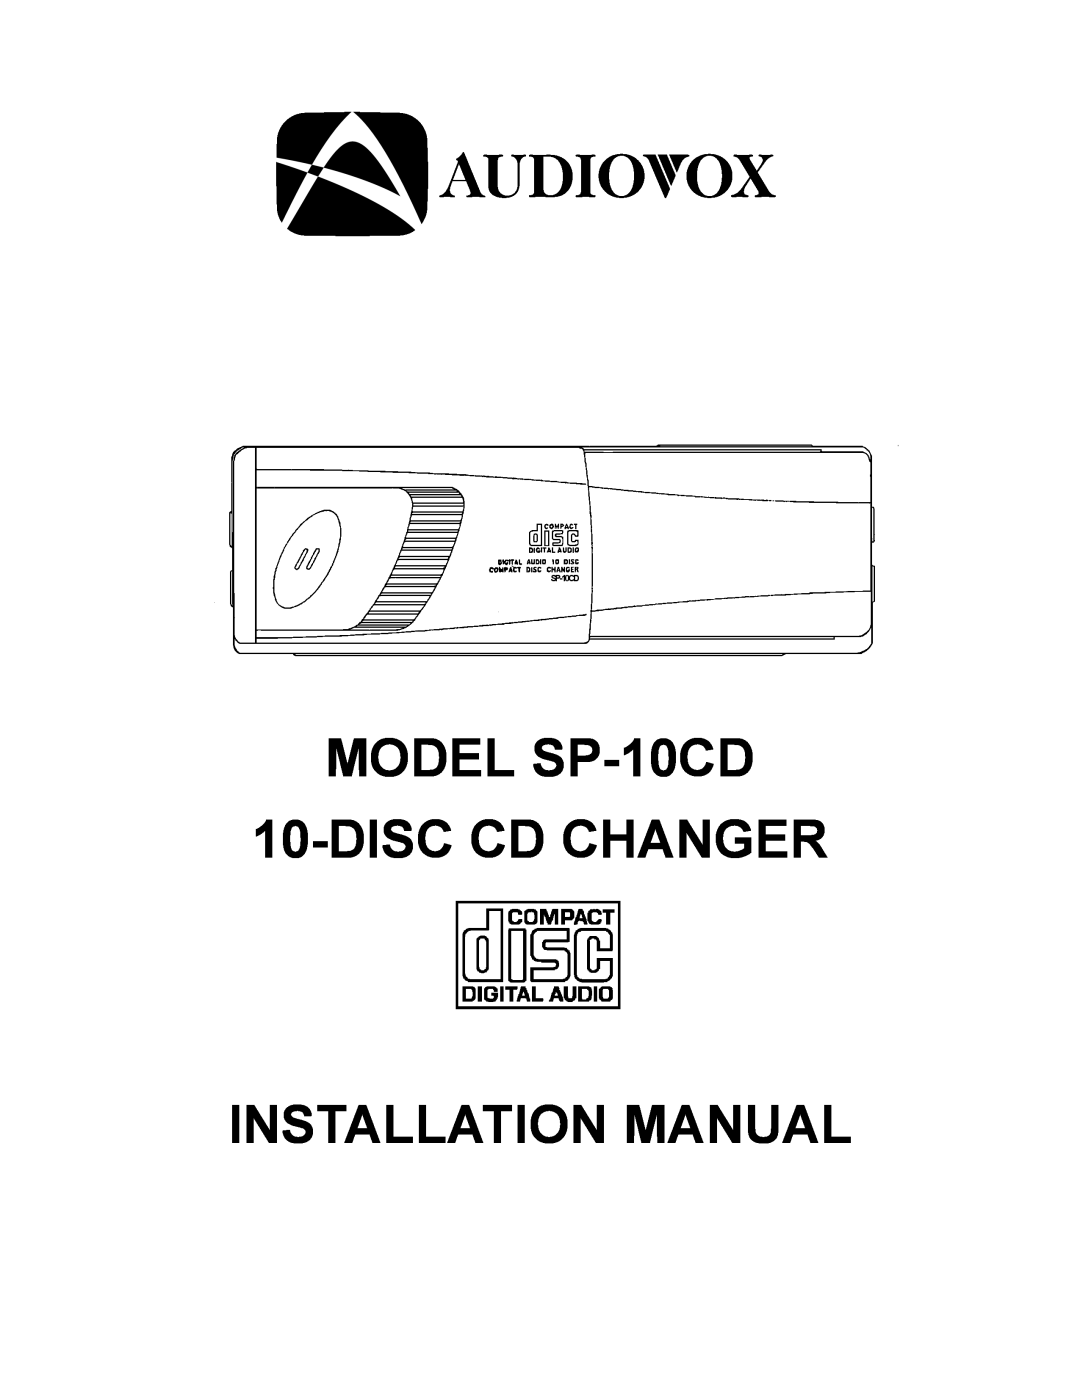 Audiovox installation manual MODEL SP-10CD 10-DISCCD CHANGER, Installation Manual 